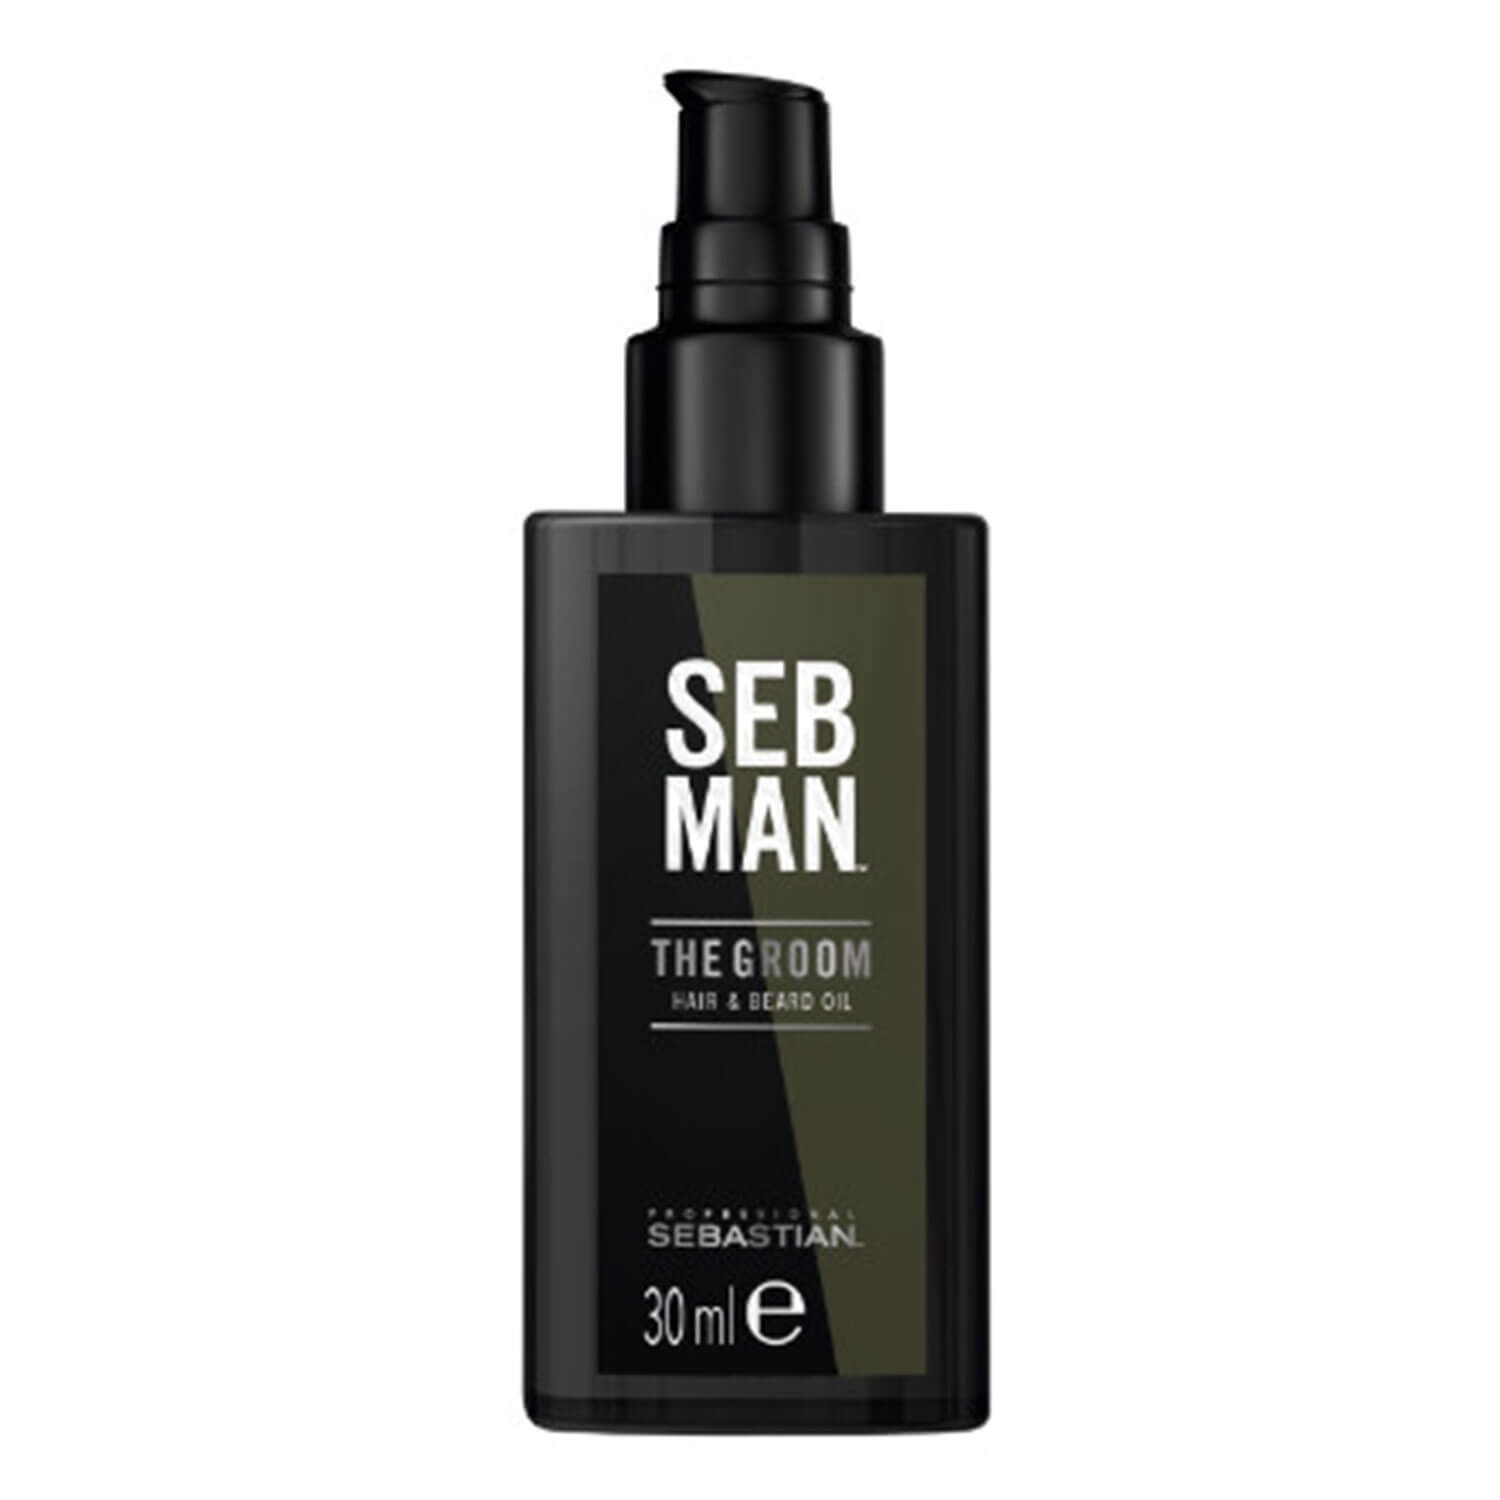 Product image from SEB MAN - The Groom Hair & Beard Oil